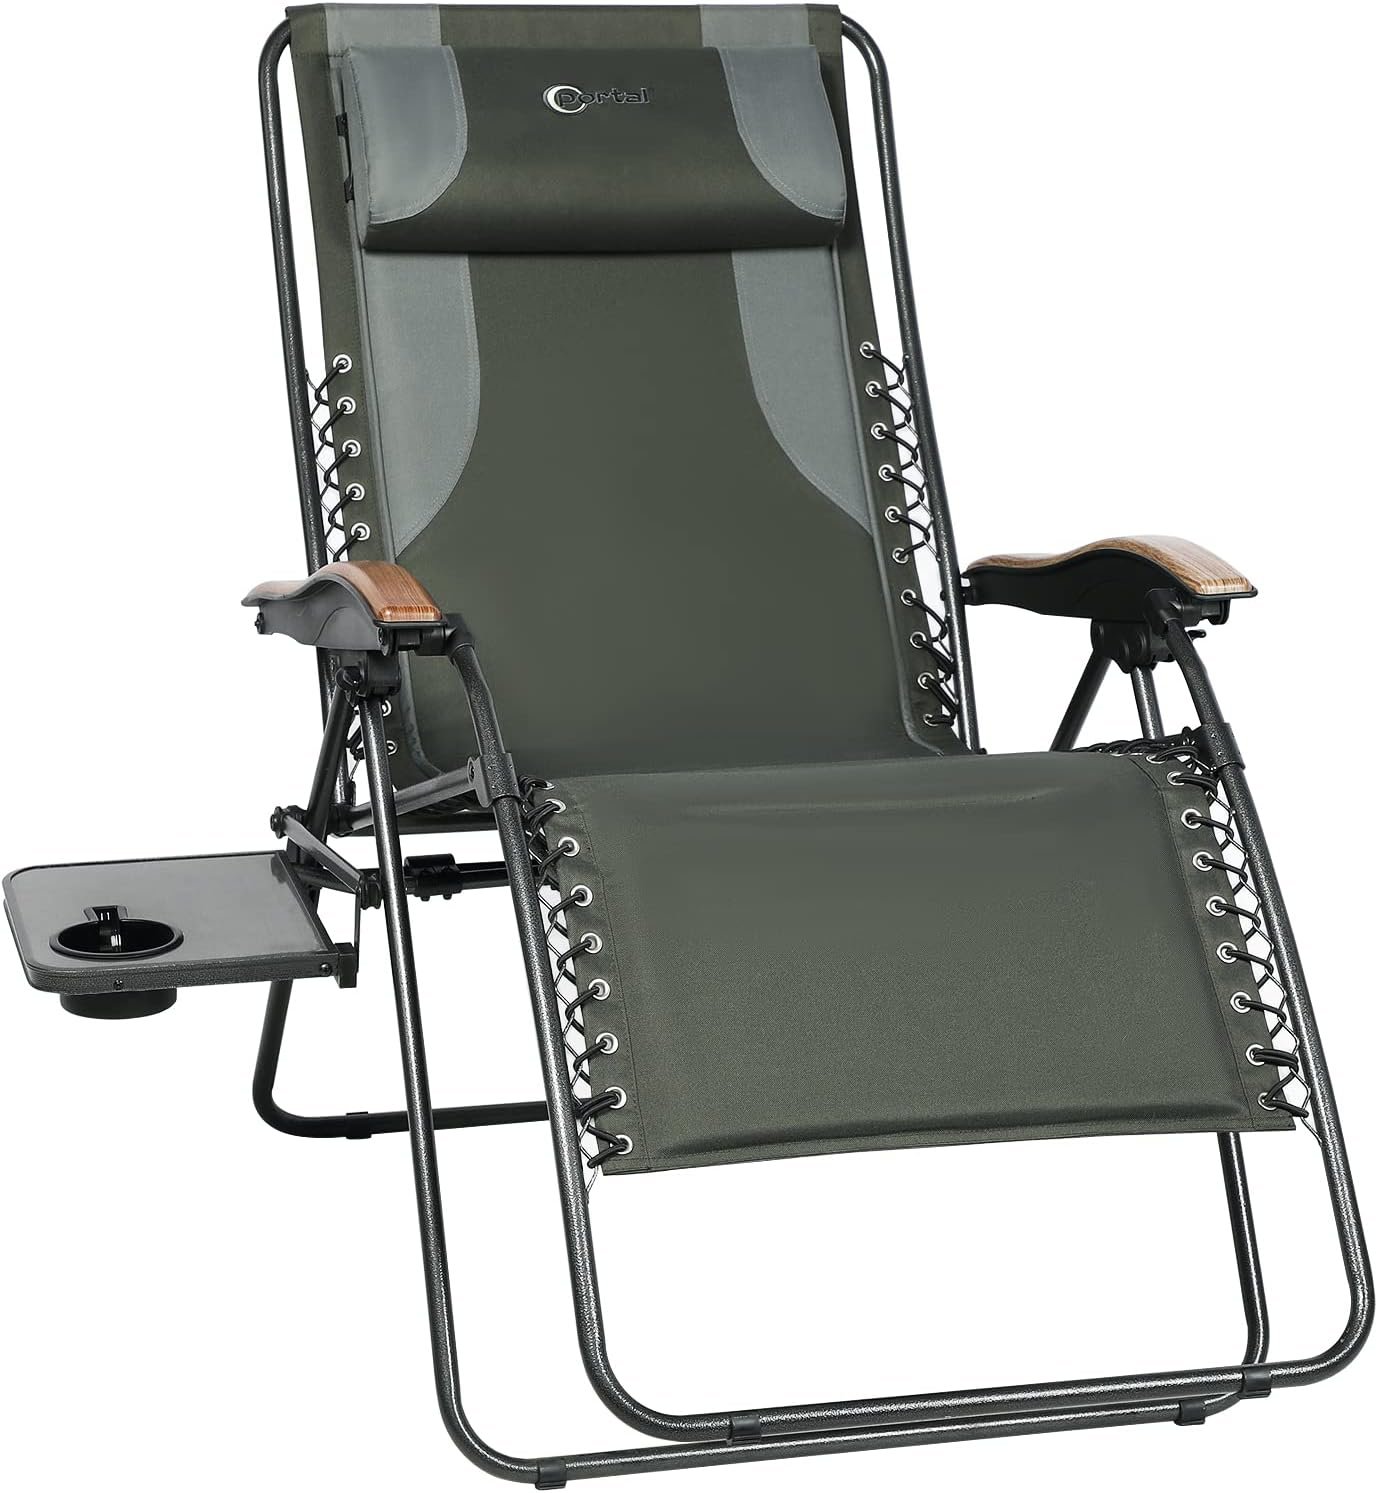 PORTAL Zero Gravity Oversized Lounge Chair Review